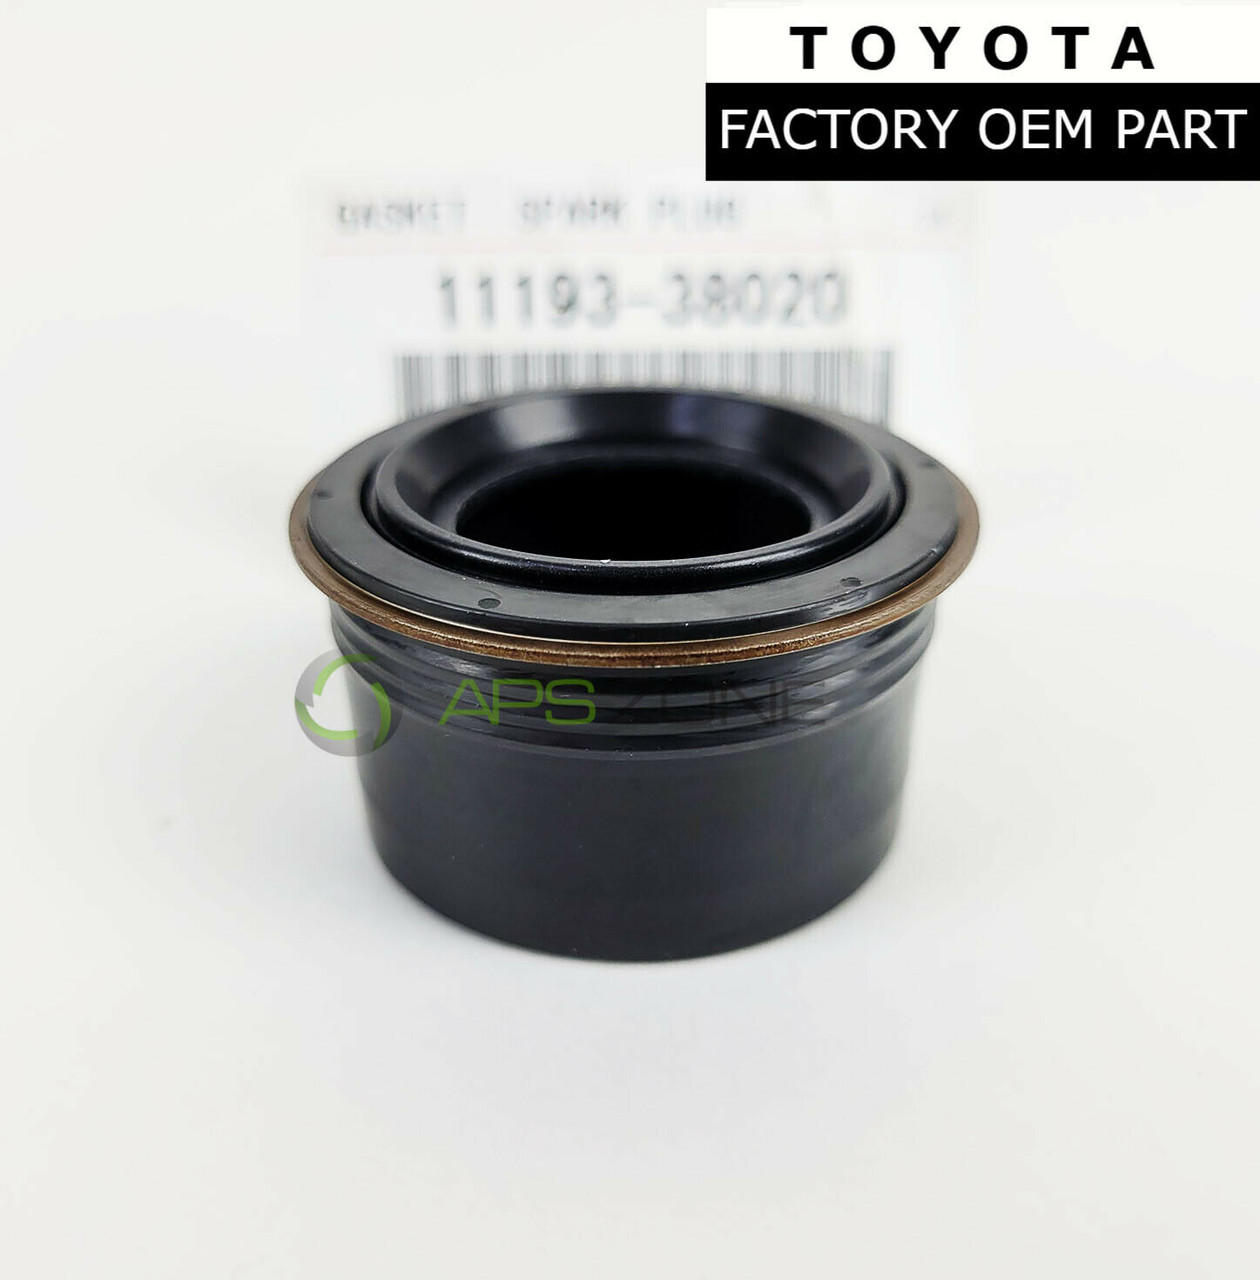 Toyota Lexus GS460 LS460 LS600h Spark Plug Seal Qyt 1 Genuine OEM 11193-38020 | 1119338020